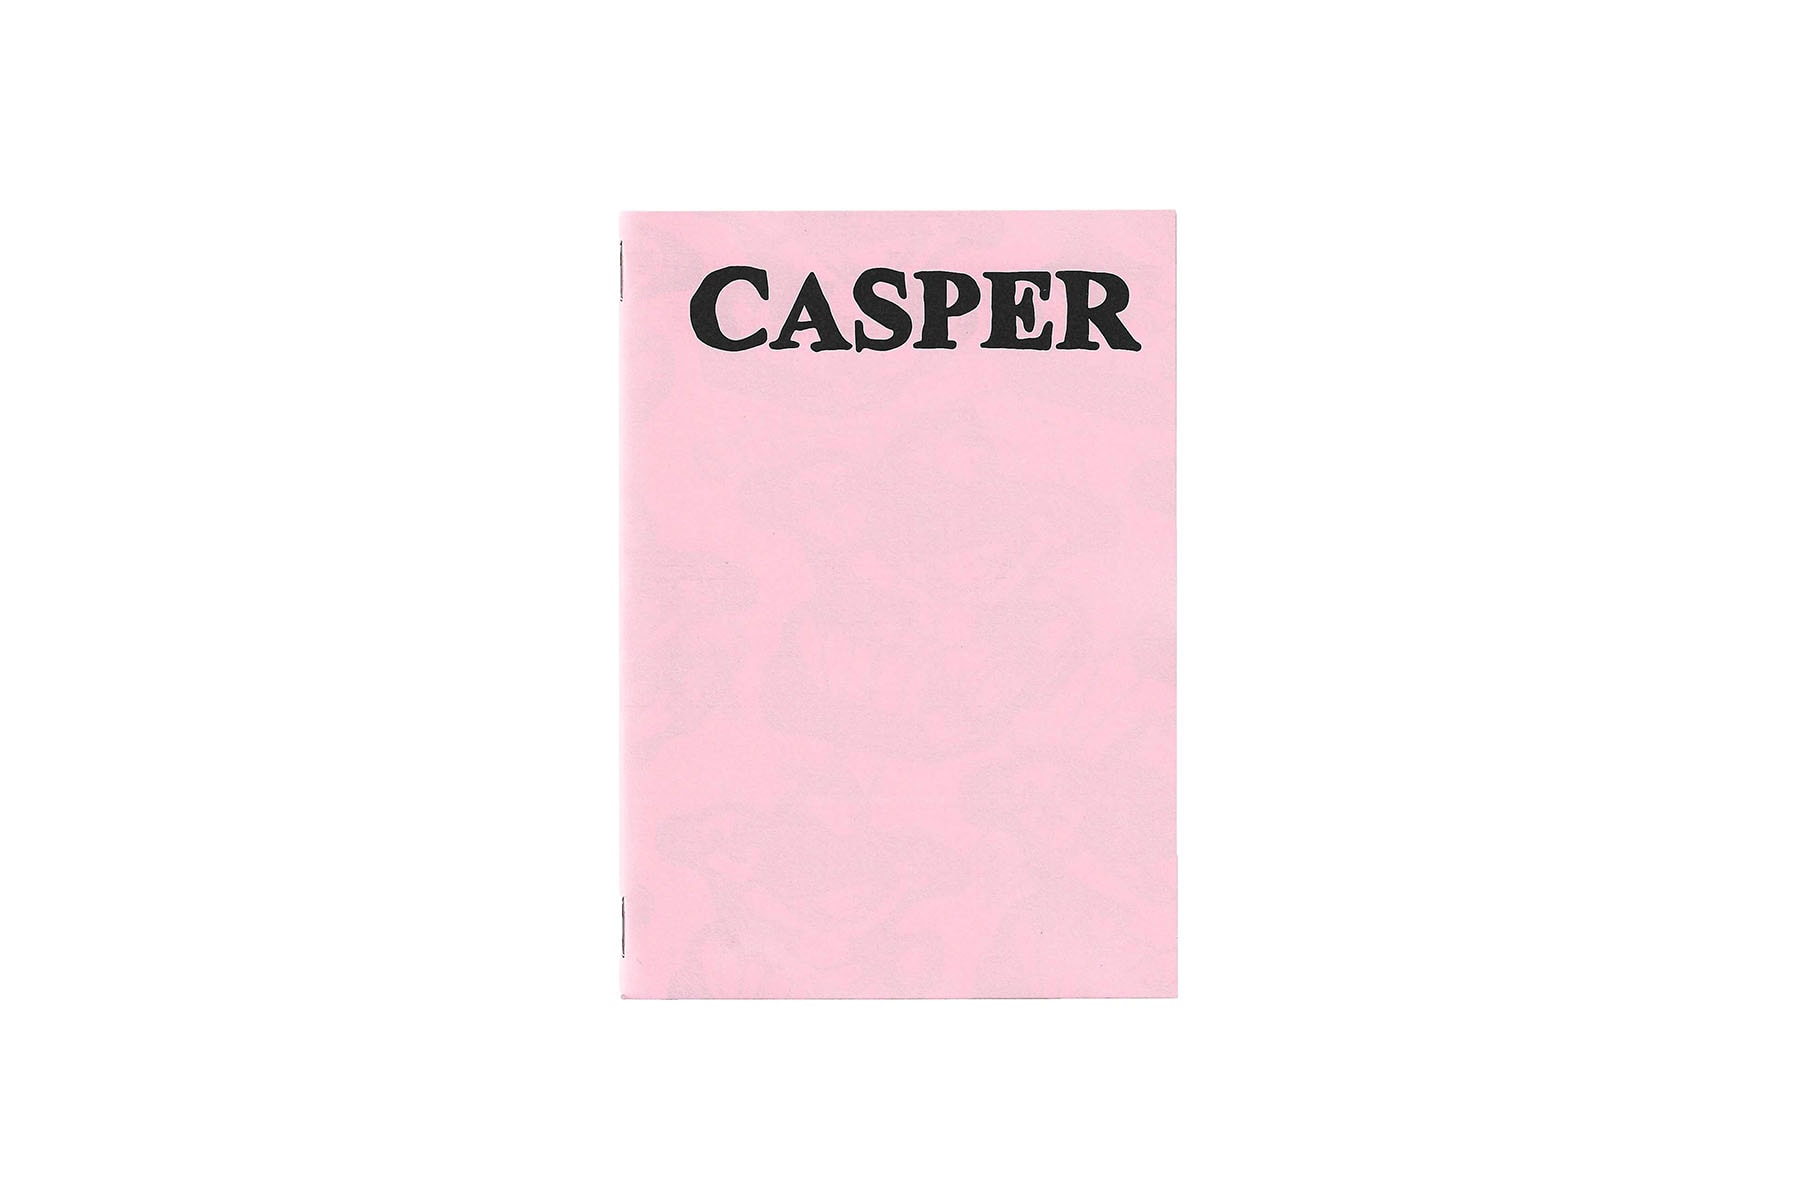 Cashmerepullover 推出原創角色地毯新品「Brown Sugar Casper」